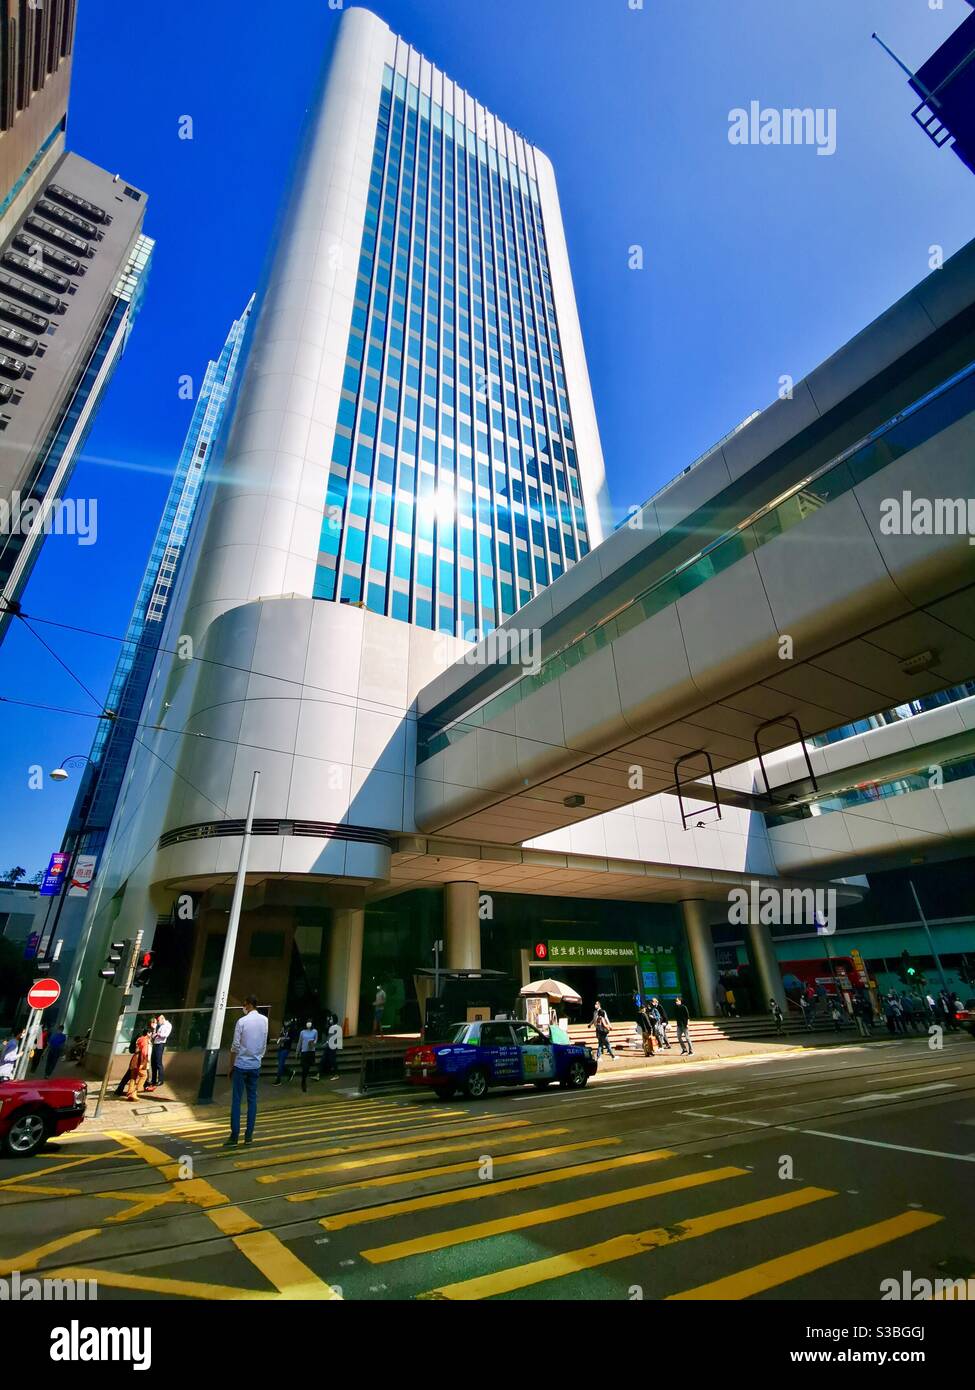 The Hang Seng bank building in Hong kong Stock Photo - Alamy